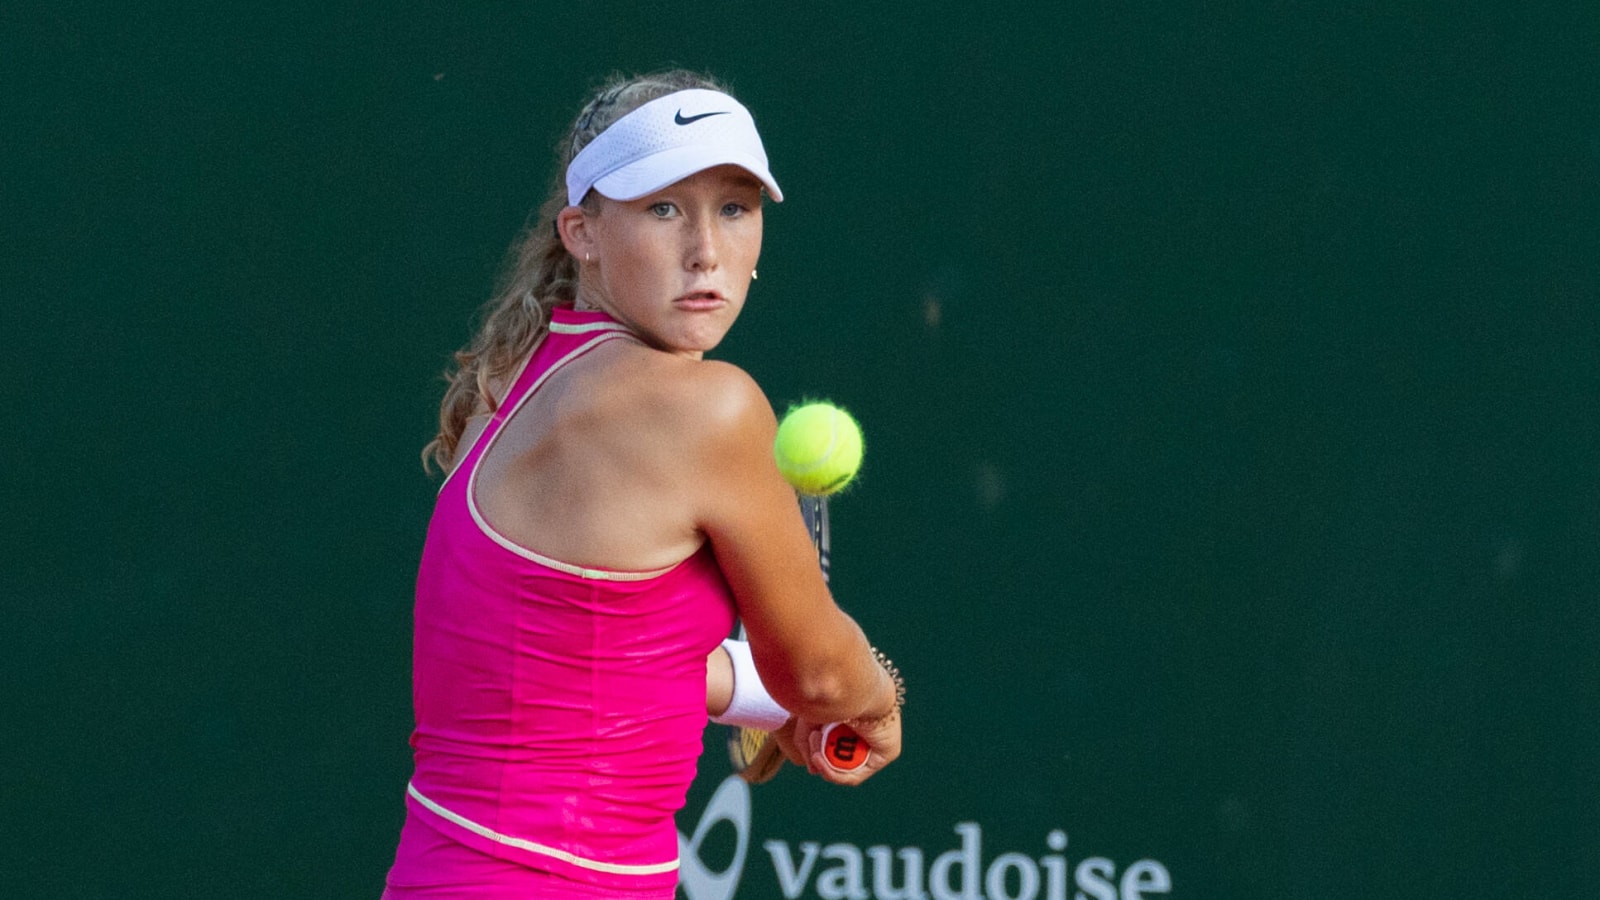 16-Year-Old Prodigy Andreeva Receives Praise By Tennis Legend Navratilova